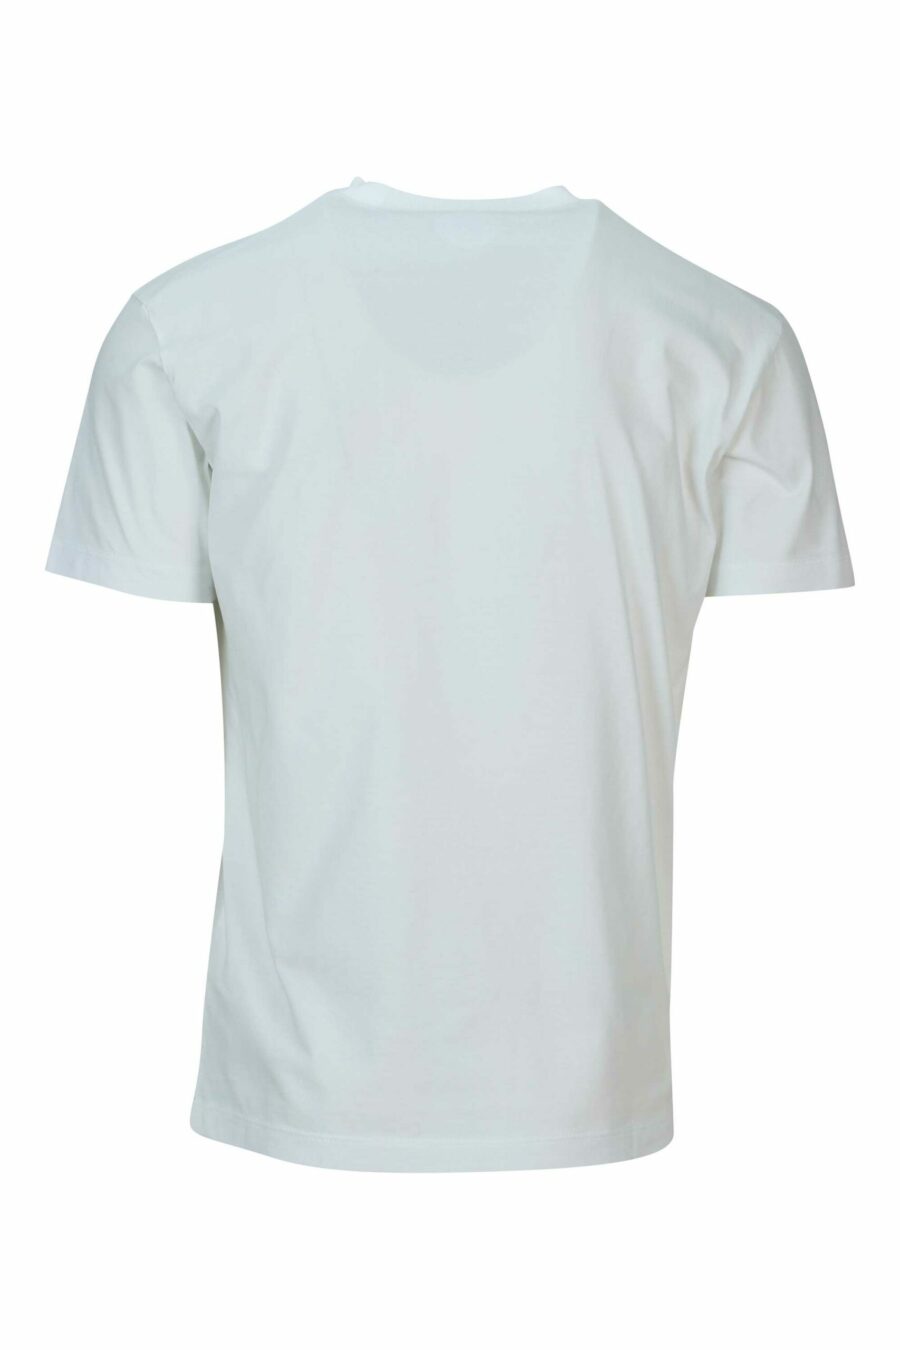 White T-shirt with maxilogo "top" - 8054148570866 1 scaled